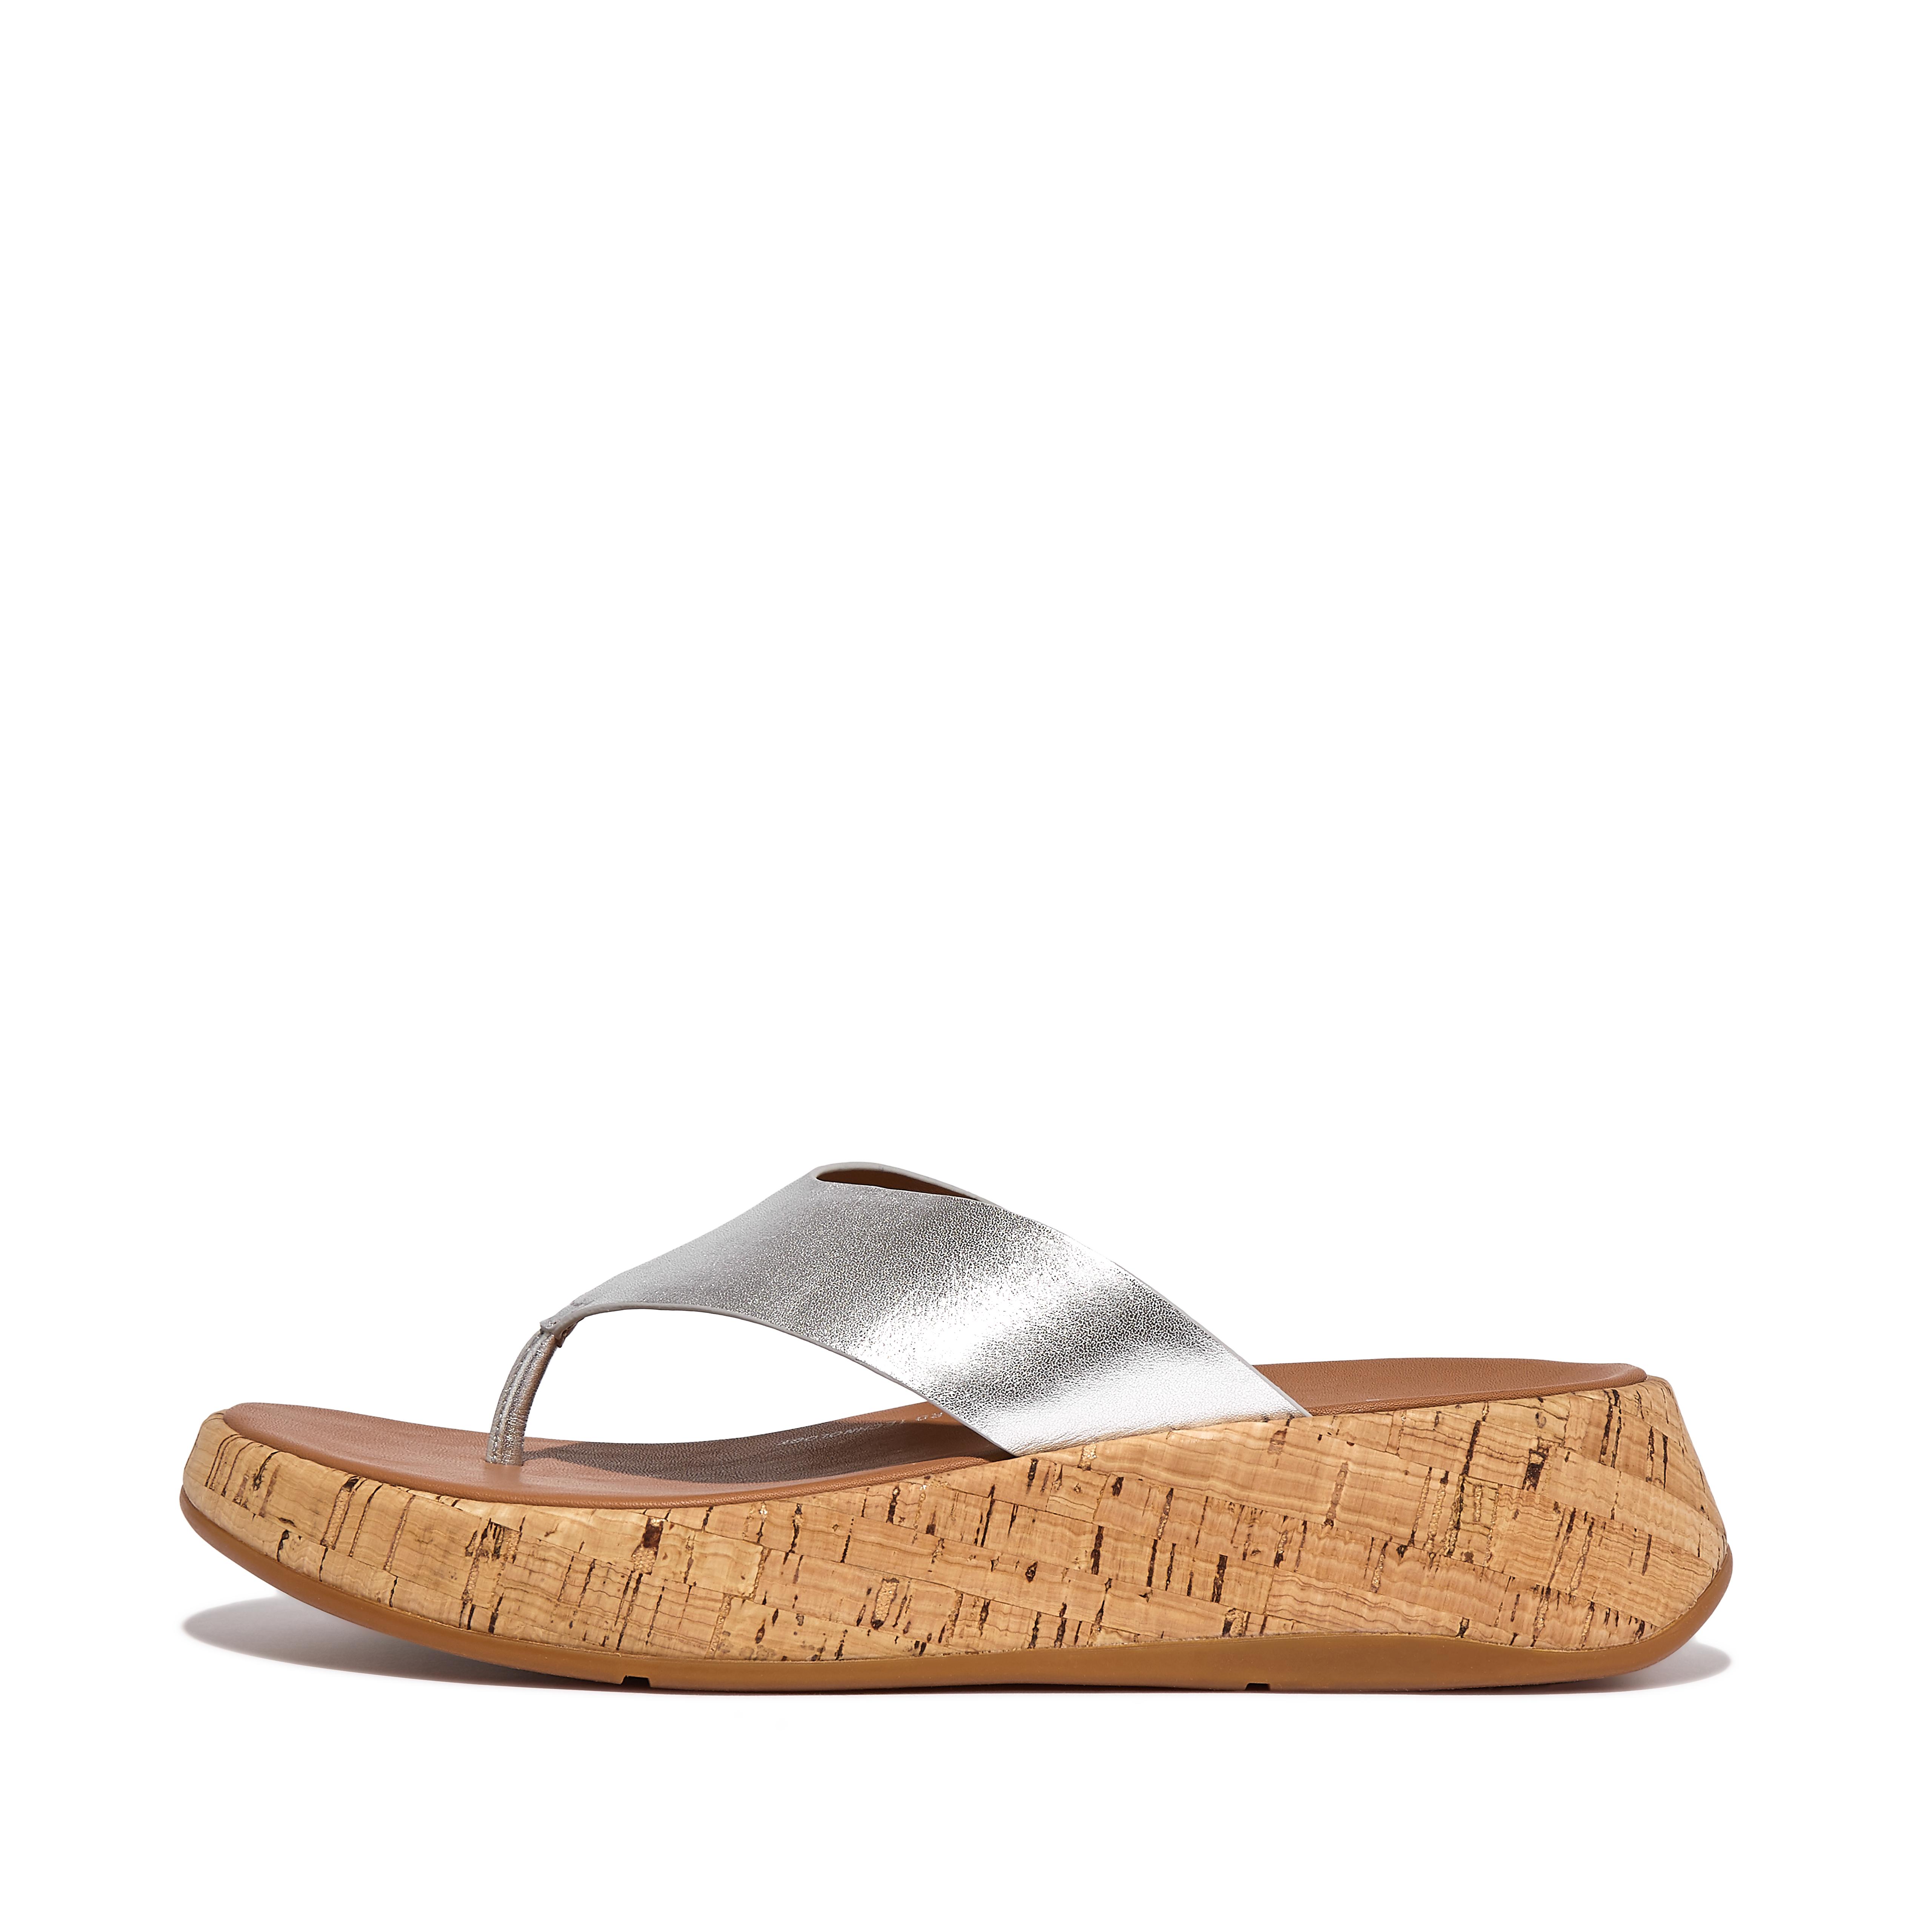 Fitflop Metallic Leather/Cork Flatform Toe-Post Sandals